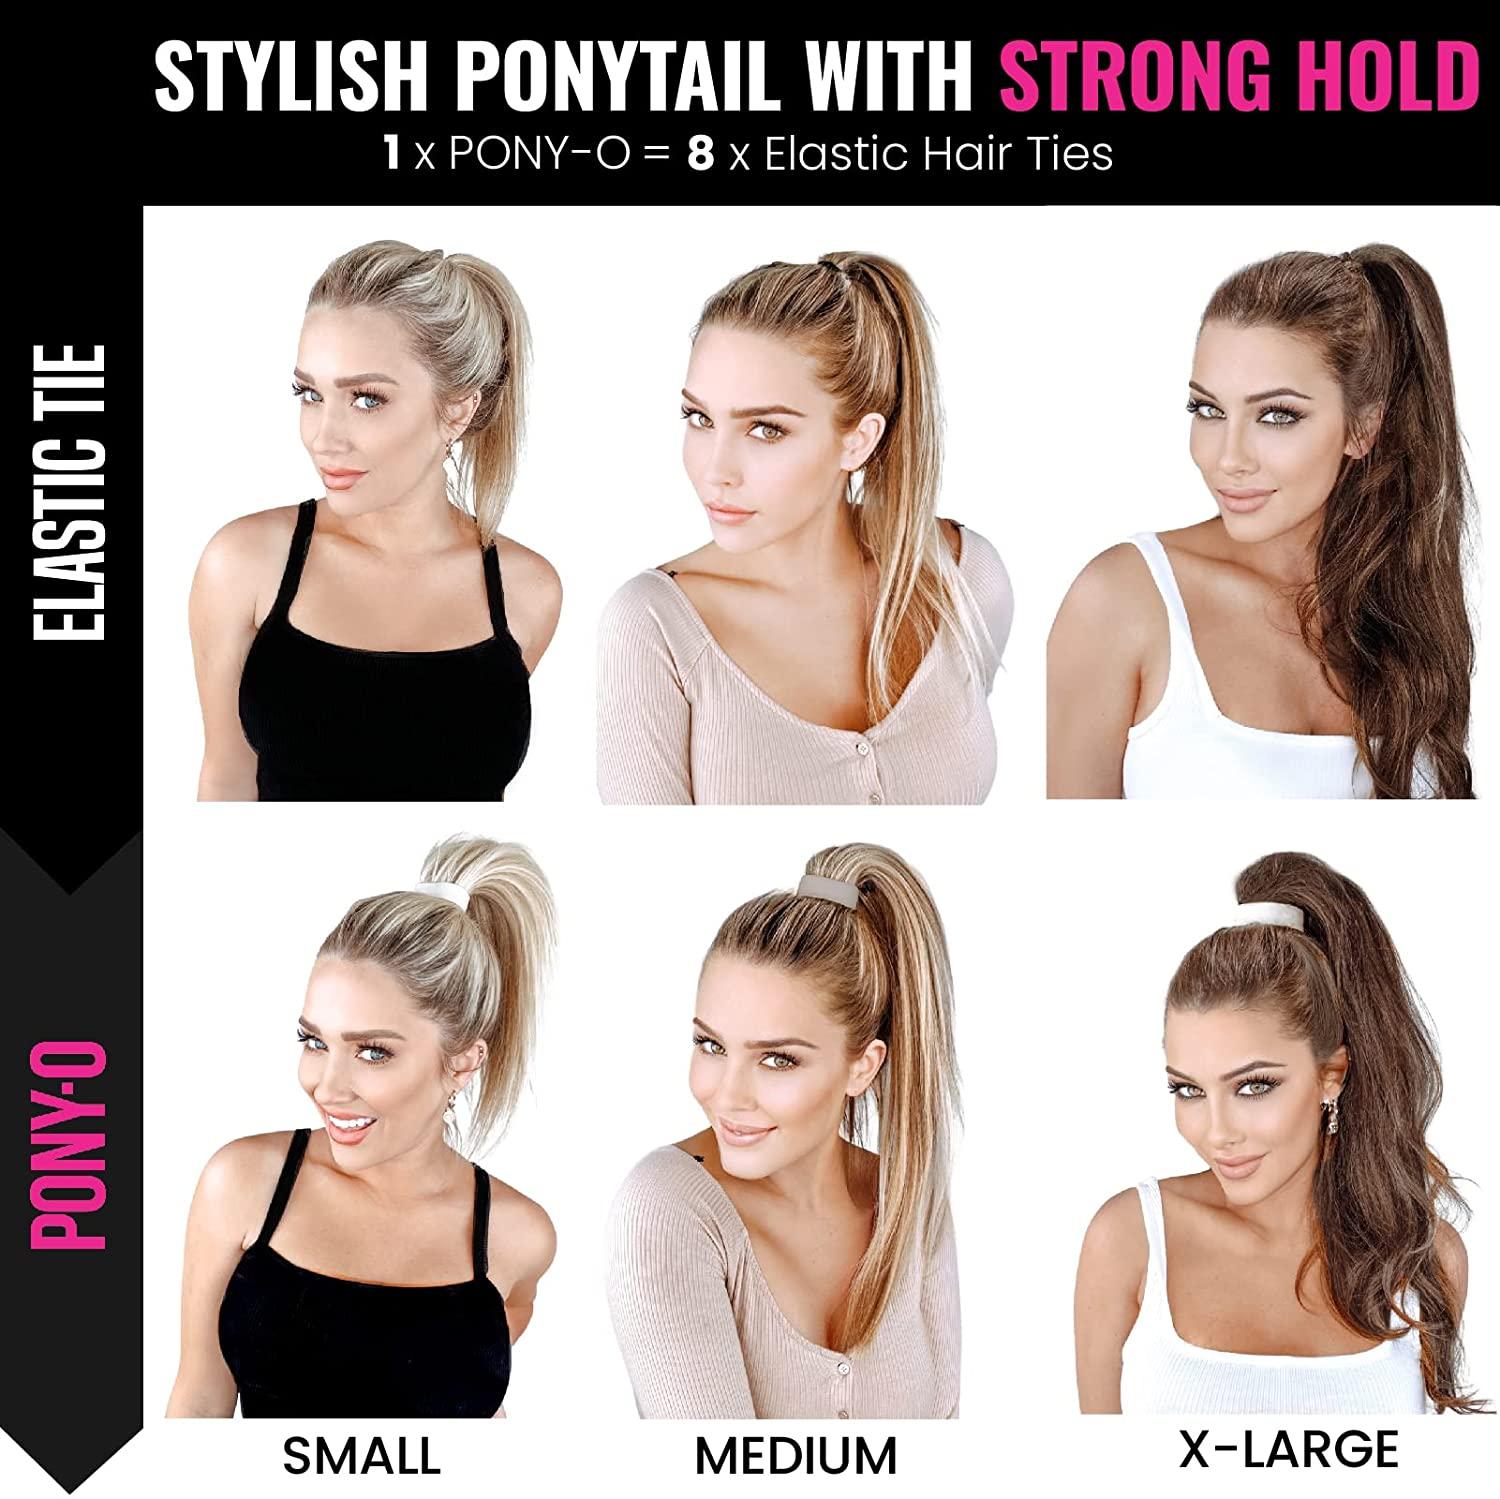 Medium PONY-O for Fine to Normal Hair or Slightly Thick Hair - PONY-O  Revolutionary Hair Tie Alternative Ponytail Holders - 2 Pack Black Original